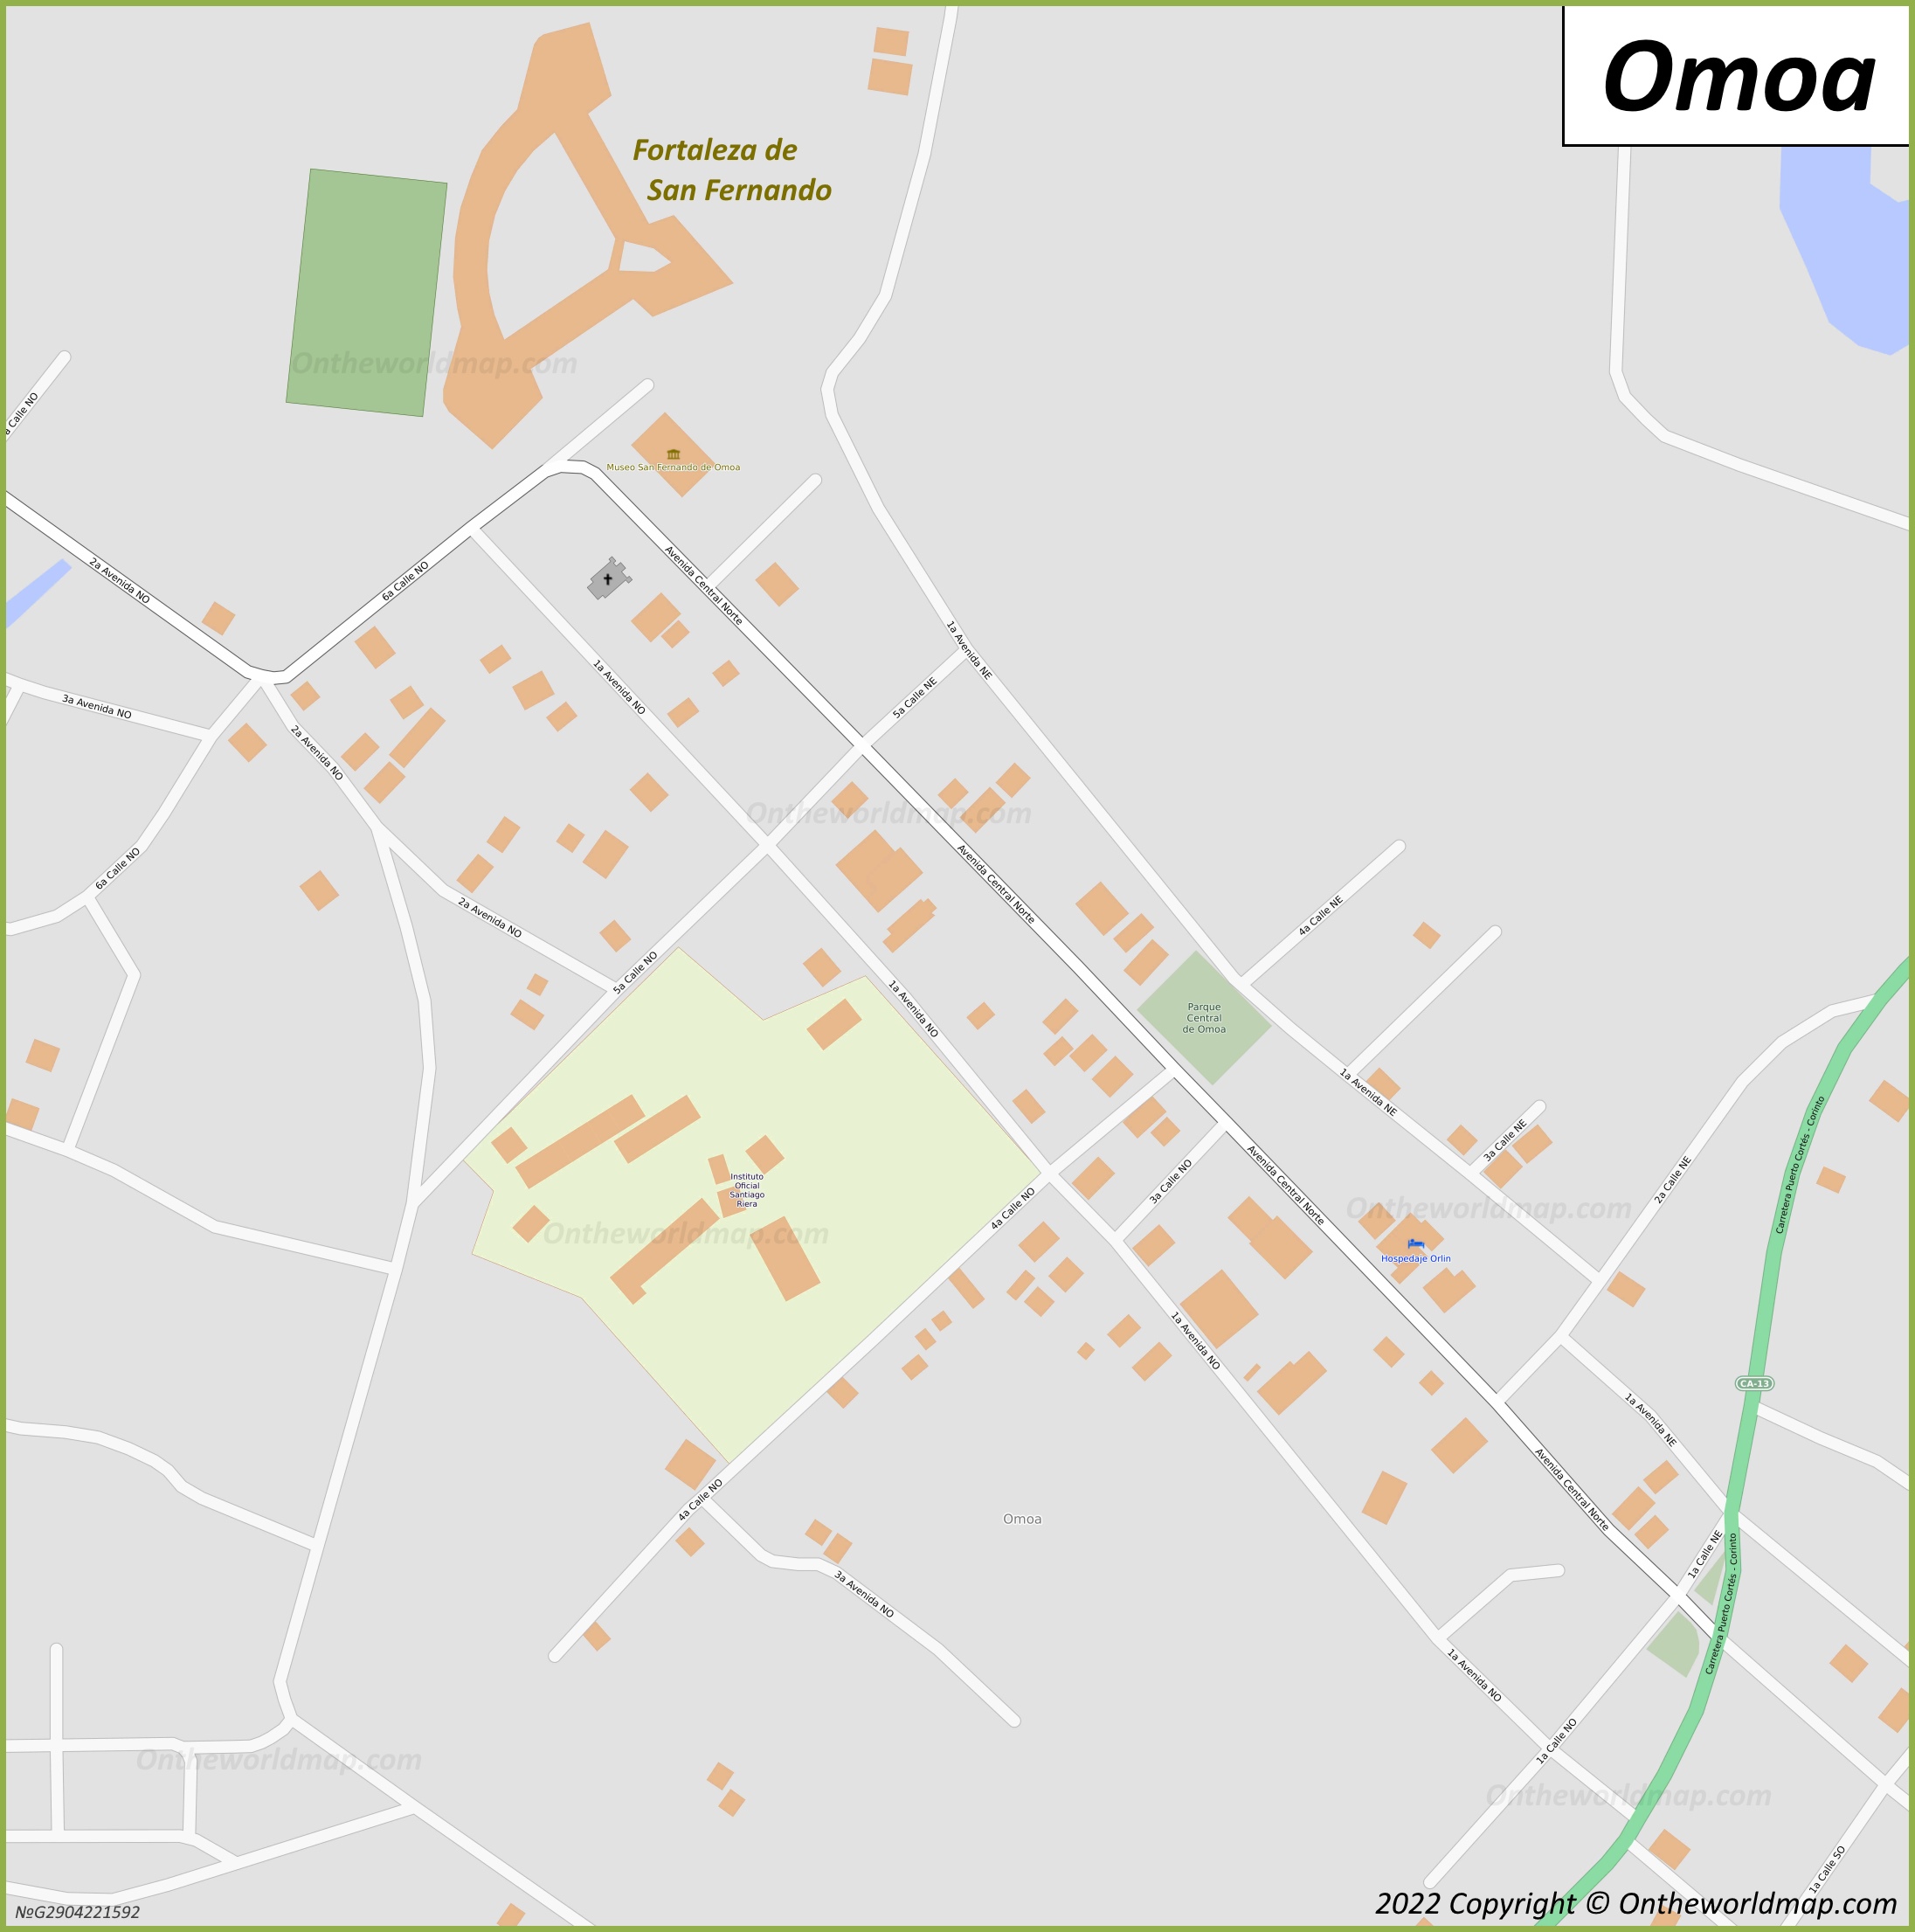 Omoa City Centre Map